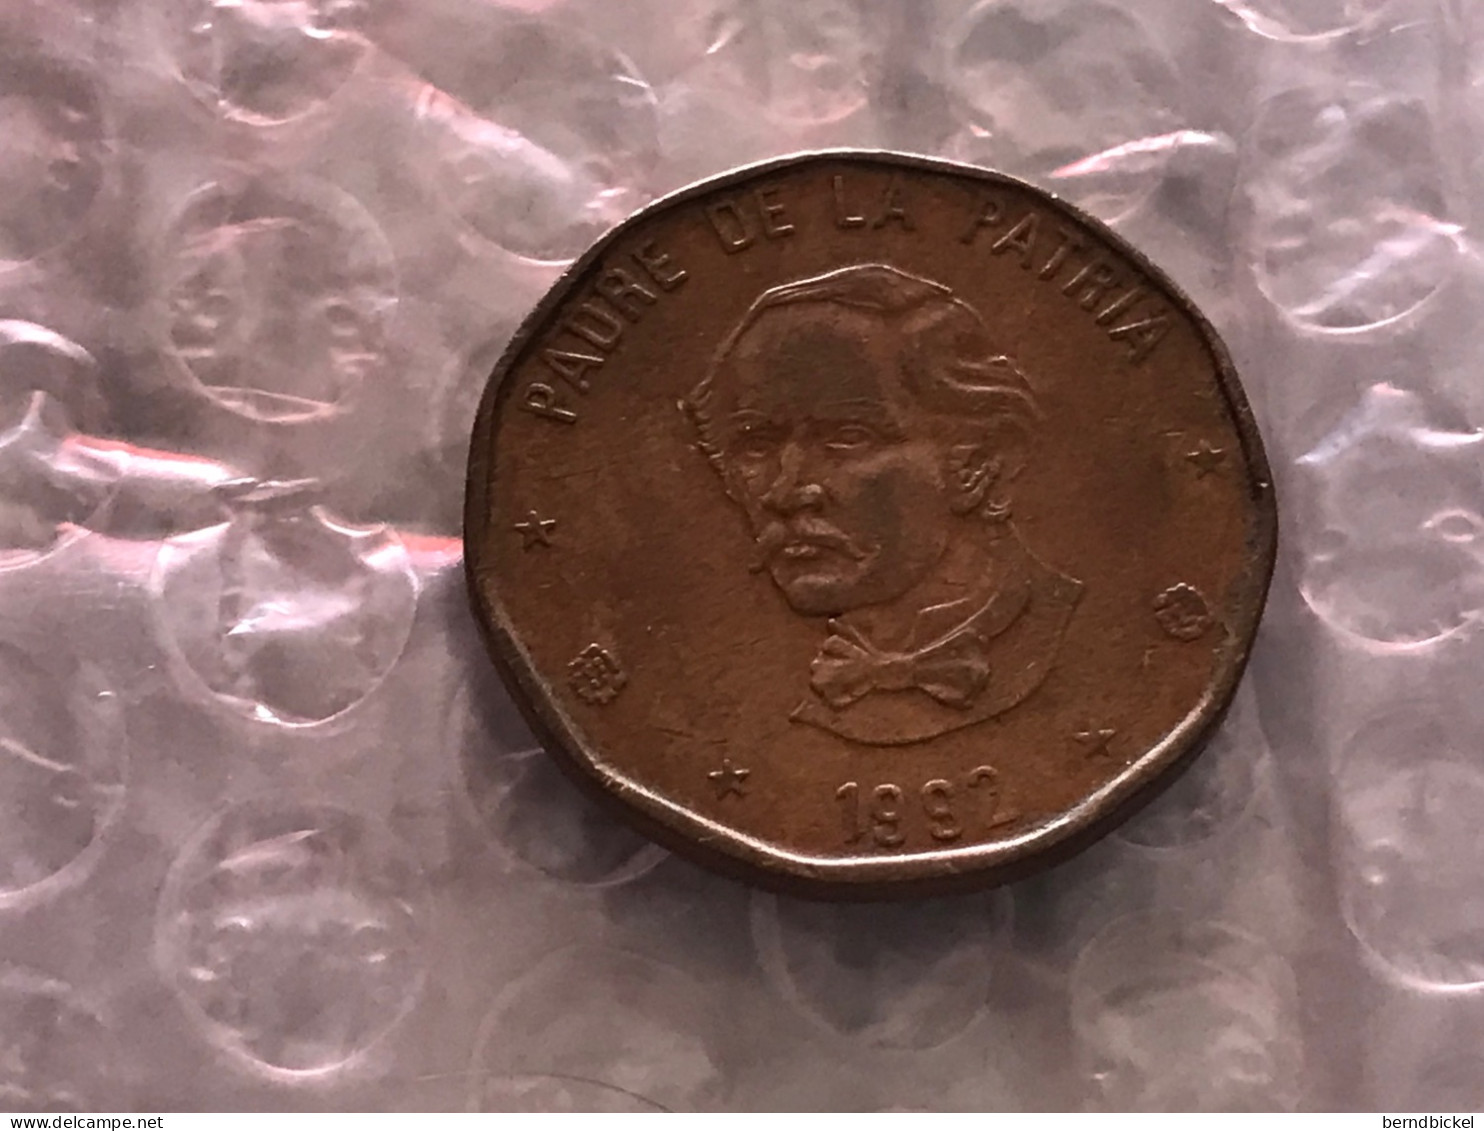 Münze Münzen Umlaufmünze Dominikanische Republik 1 Peso 1992 - Dominikanische Rep.